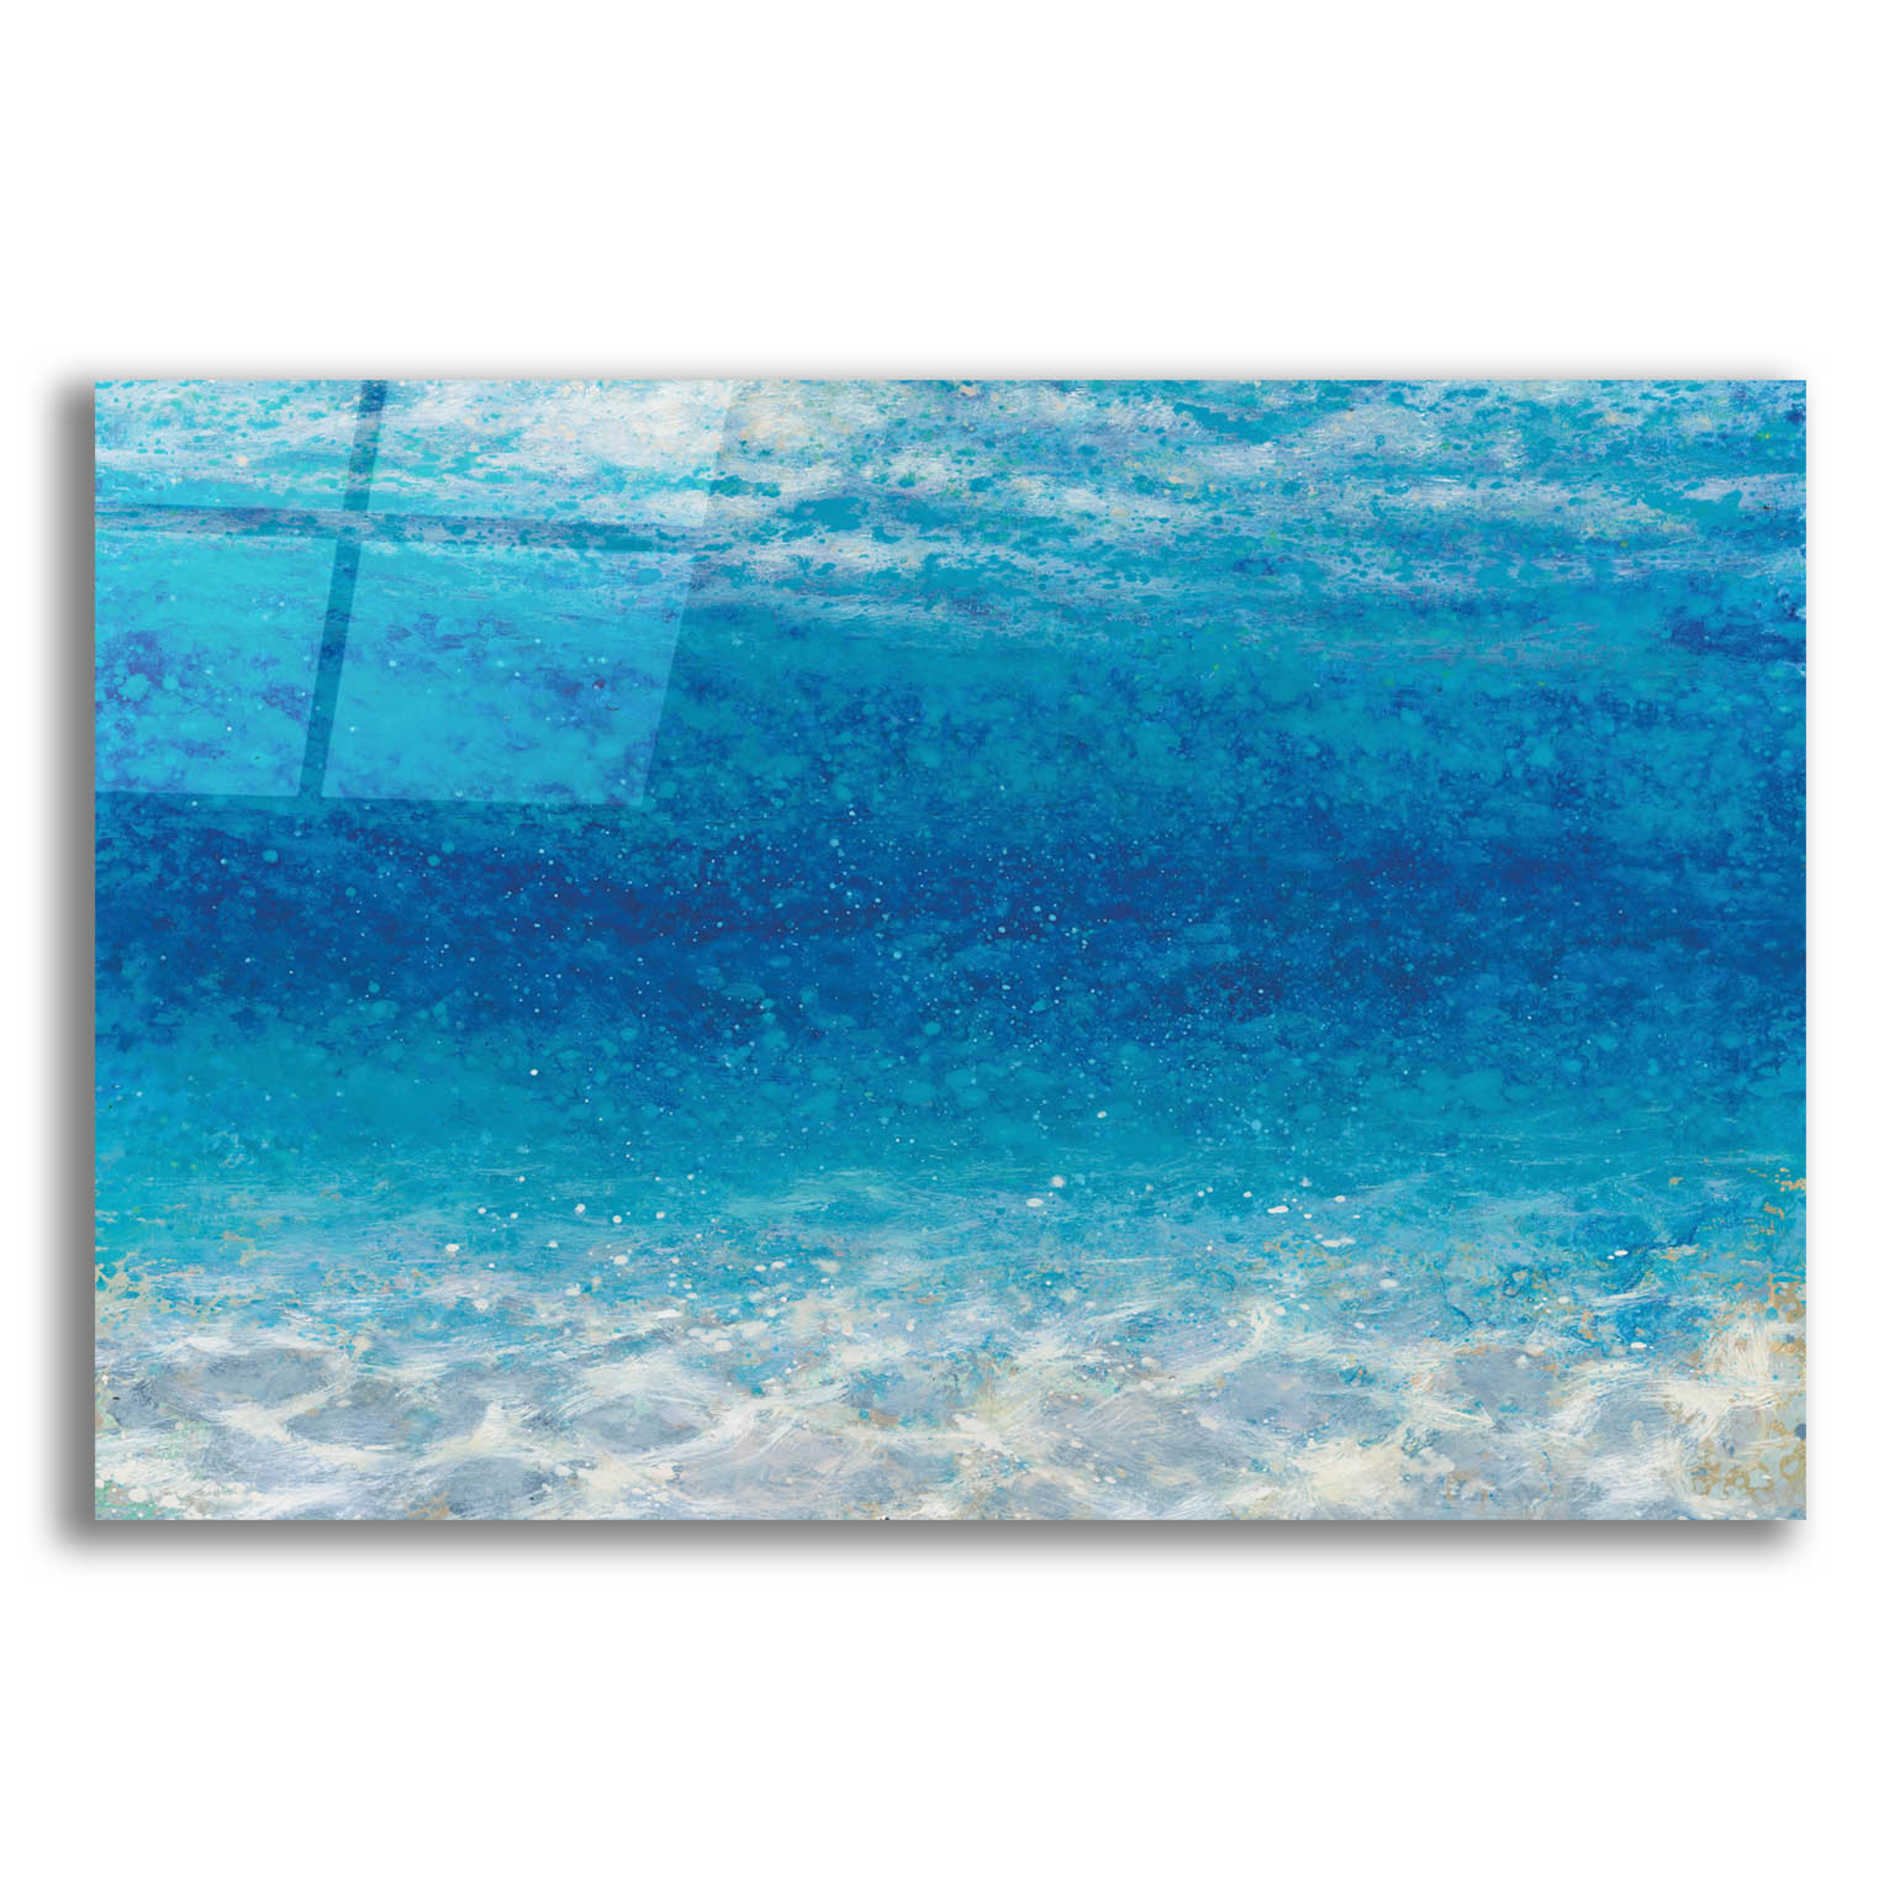 Epic Art 'Underwater I' by James Wiens, Acrylic Glass Wall Art,18x12x1.1x0,26x18x1.1x0,40x26x1.74x0,60x40x1.74x0